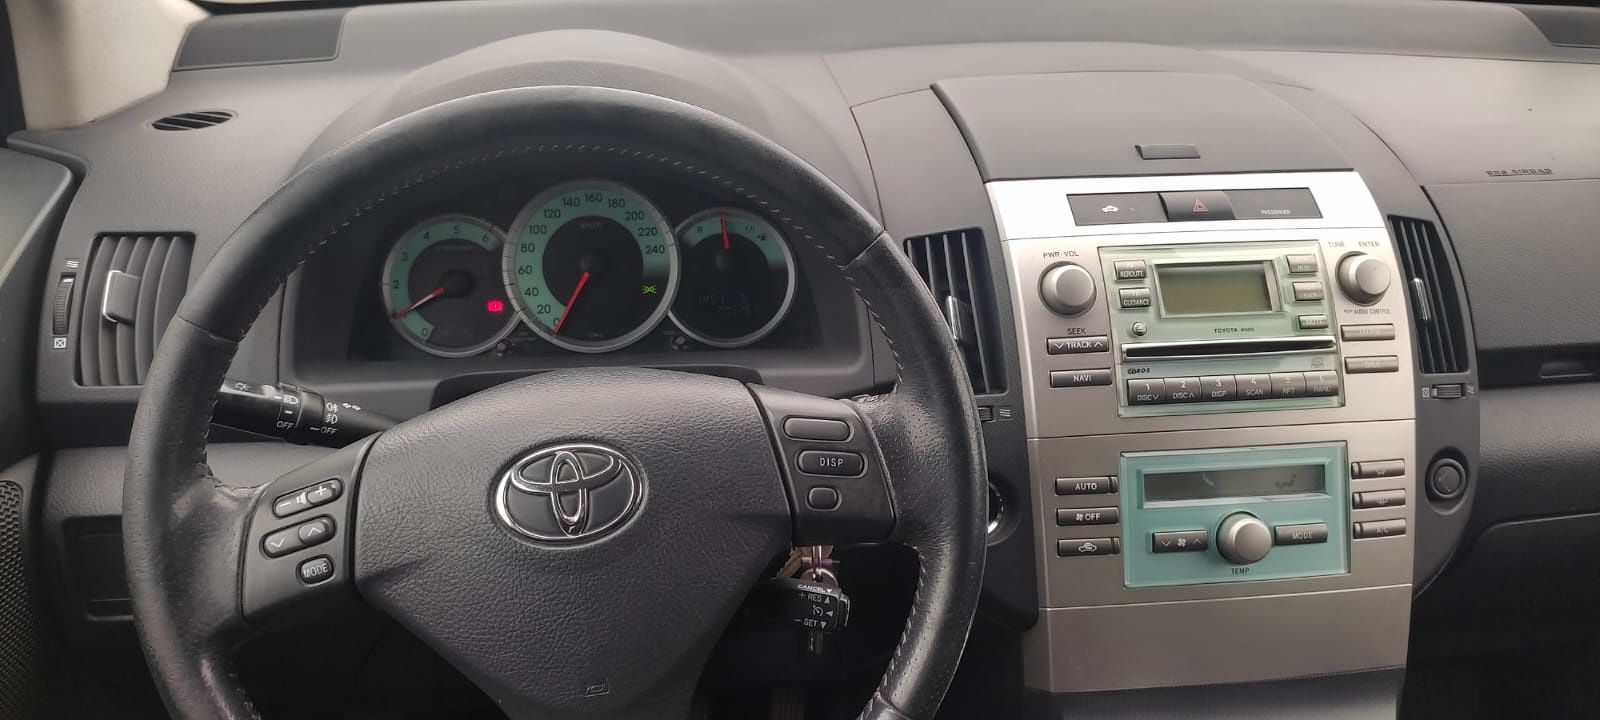 Toyota corolla verso 
An 2006 
Motor 2.2 177 CP
Egr înlocuit 
Sistem f